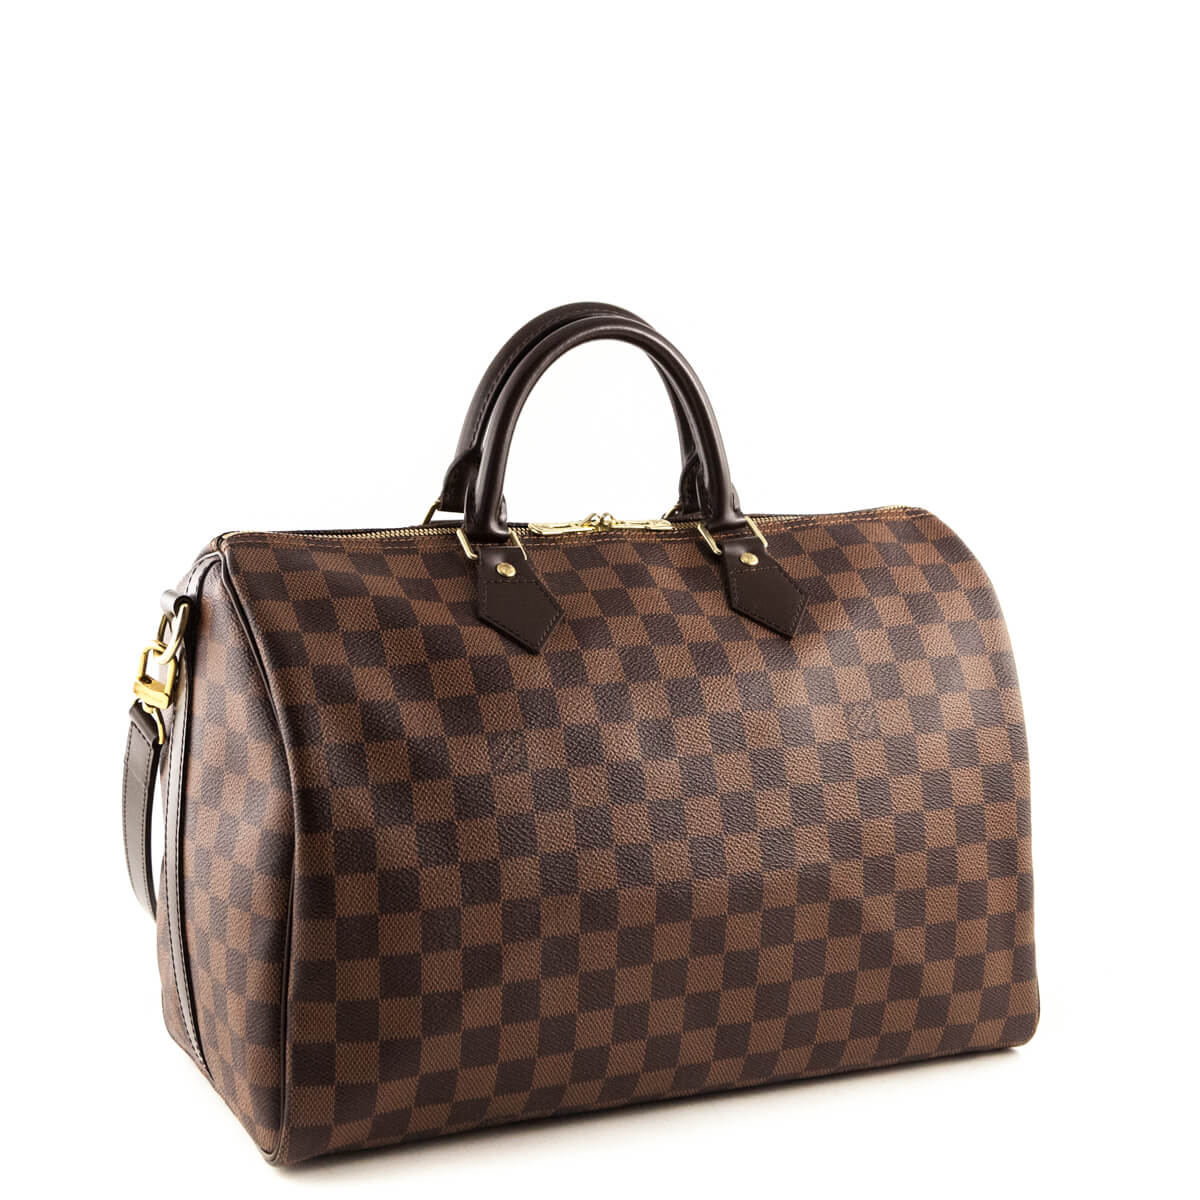 Louis Vuitton Speedy 35 Bag In Monogram/damier Ebene | CINEMAS 93